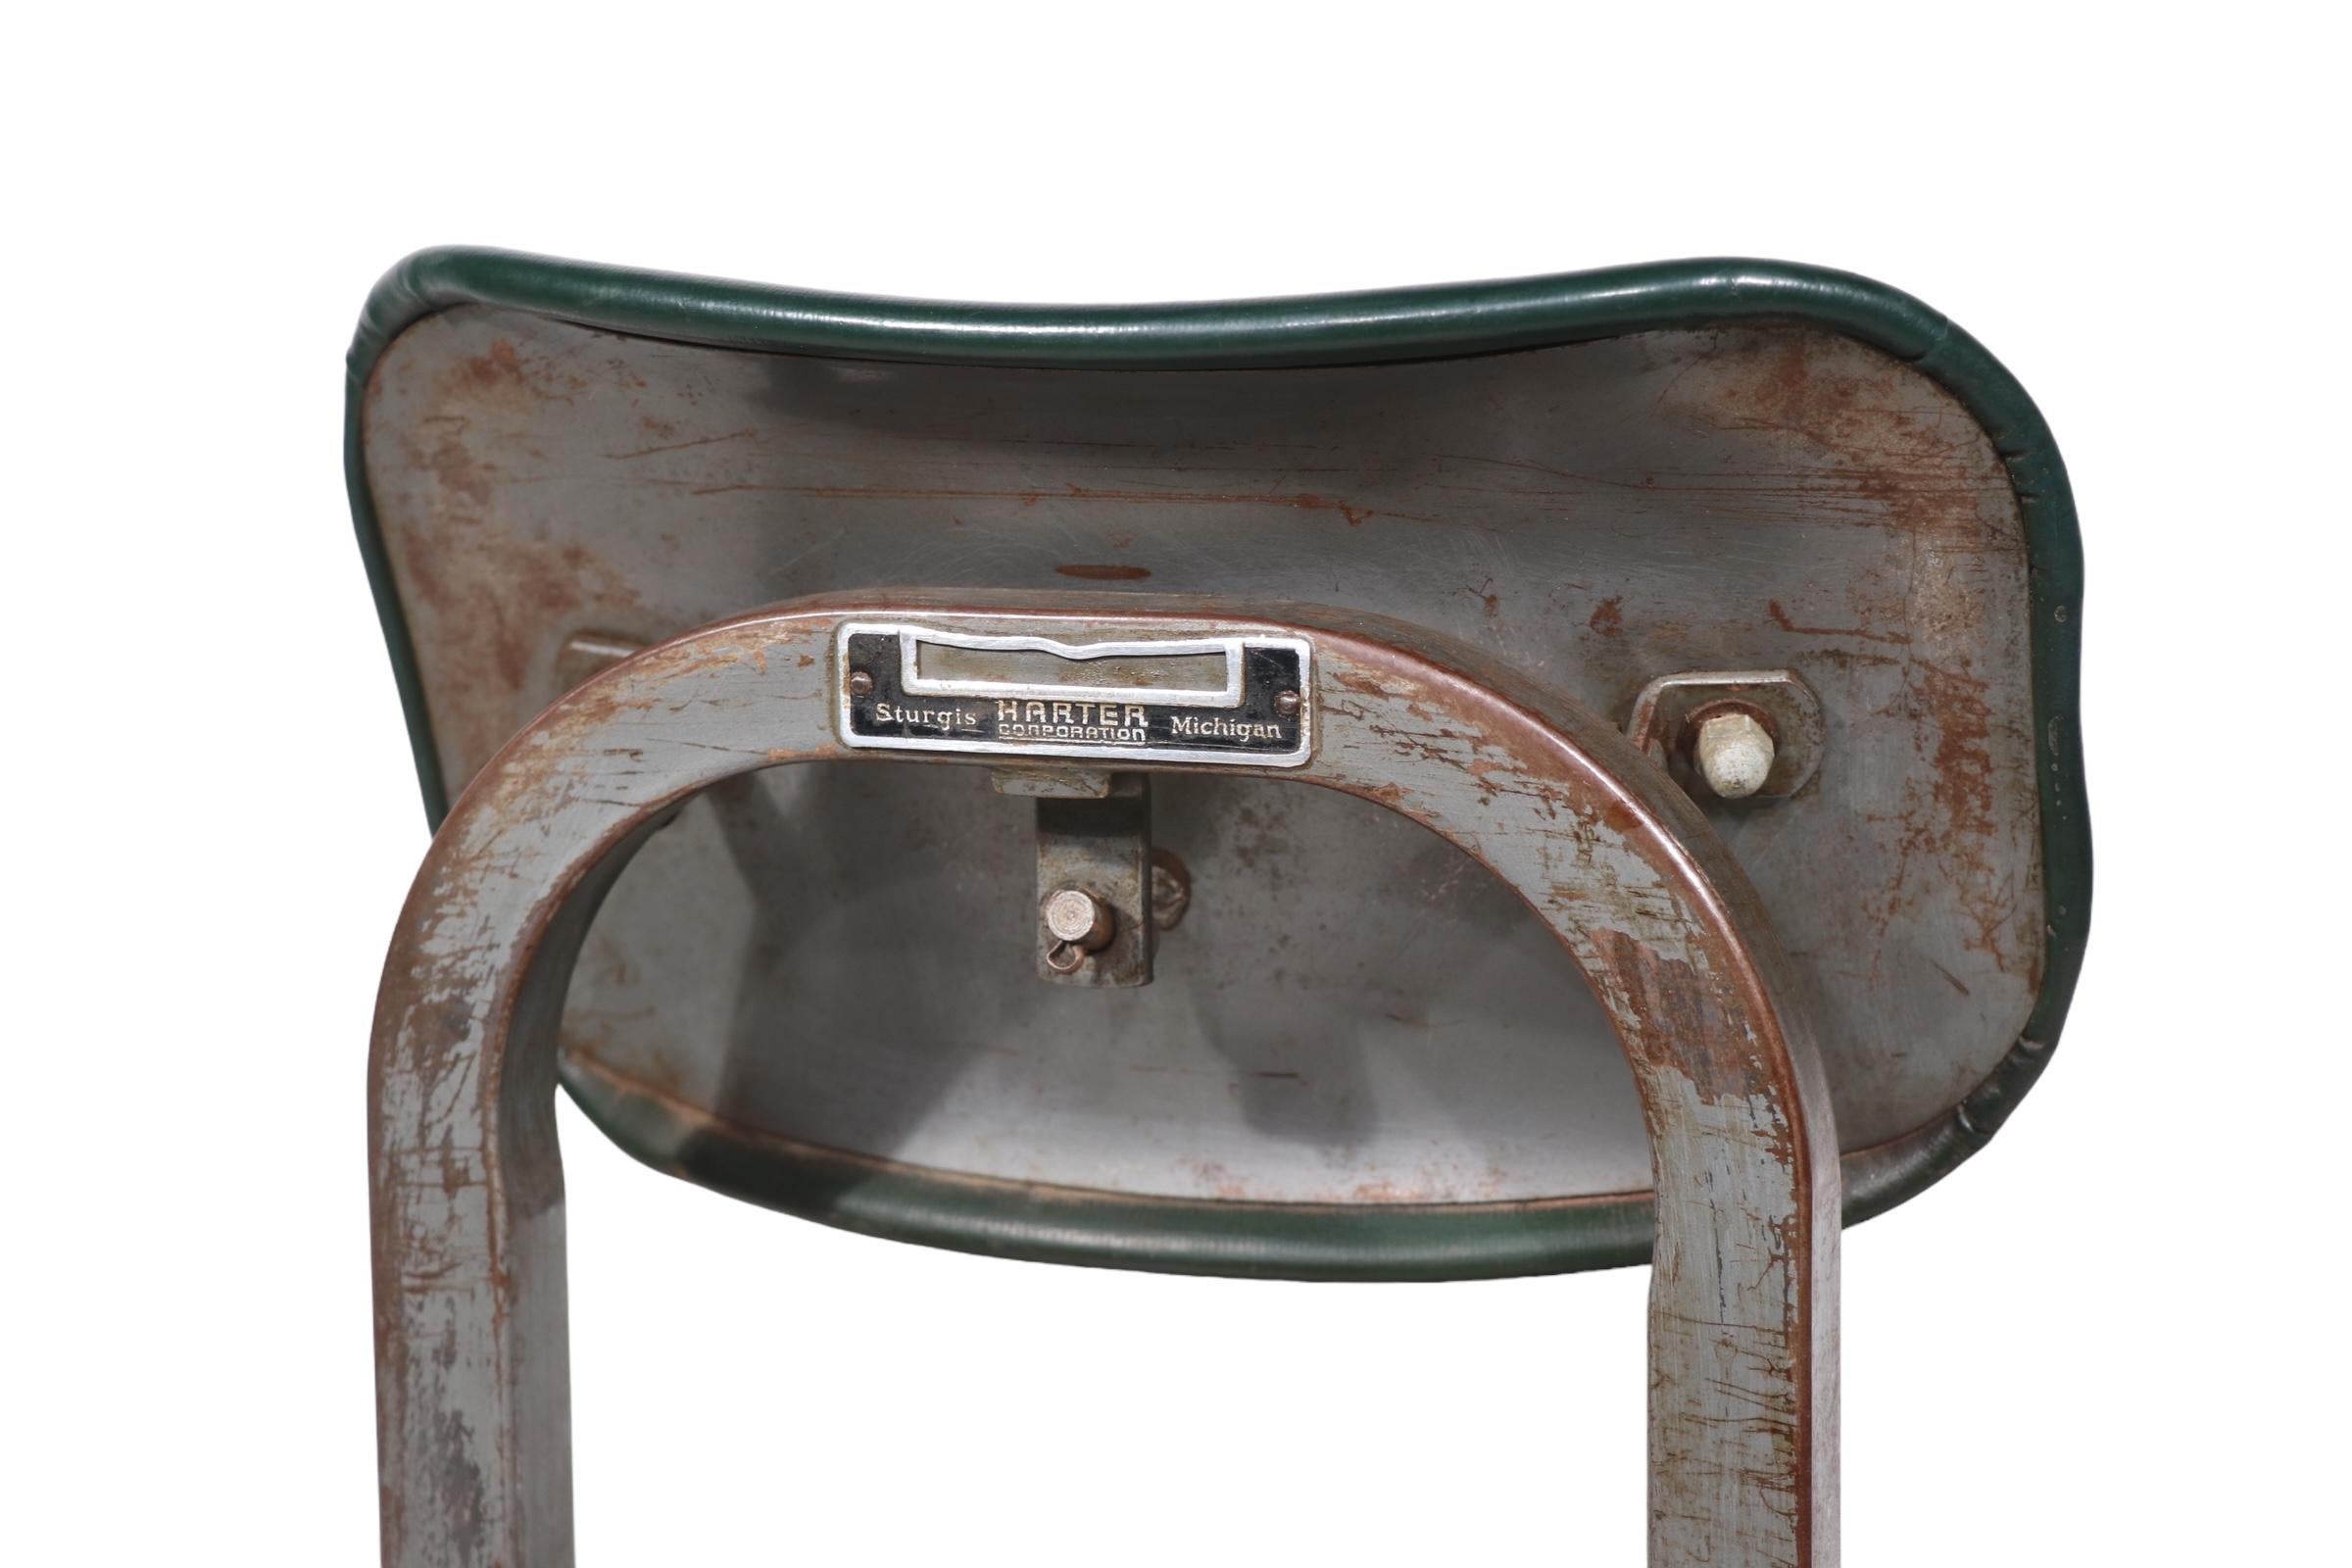 Art Deco Industrial Swivel Tilt Armless Desk Chair by Harter Corporation 1930/40 For Sale 5